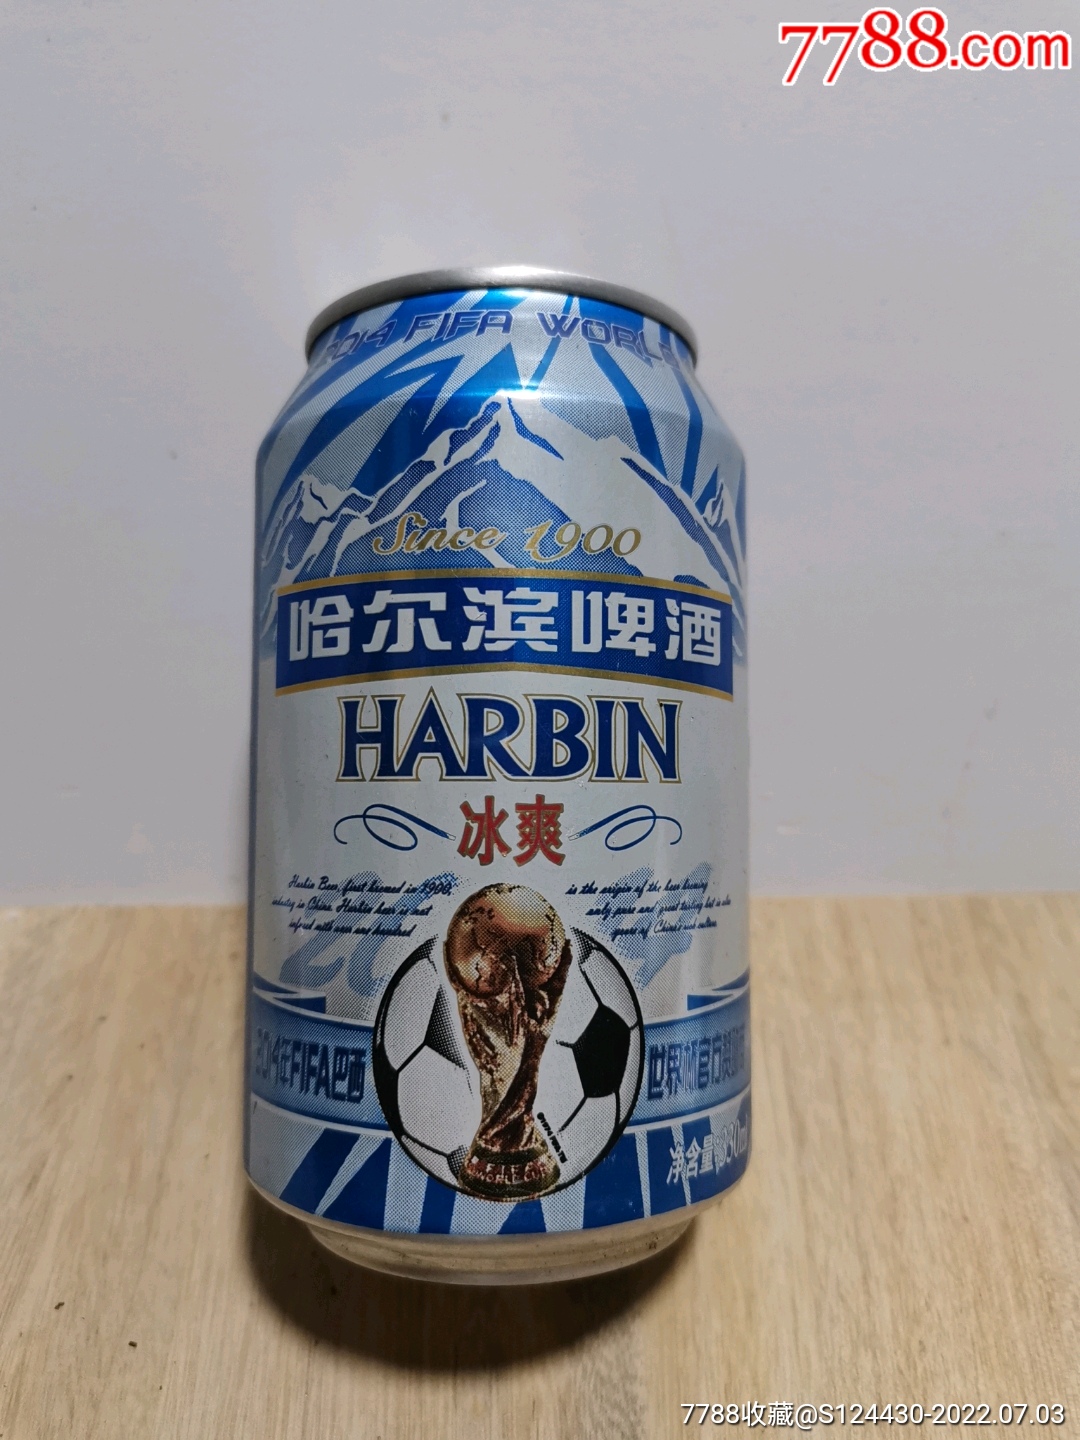 哈尔滨啤酒 harbin beer 哈啤-罐头图库